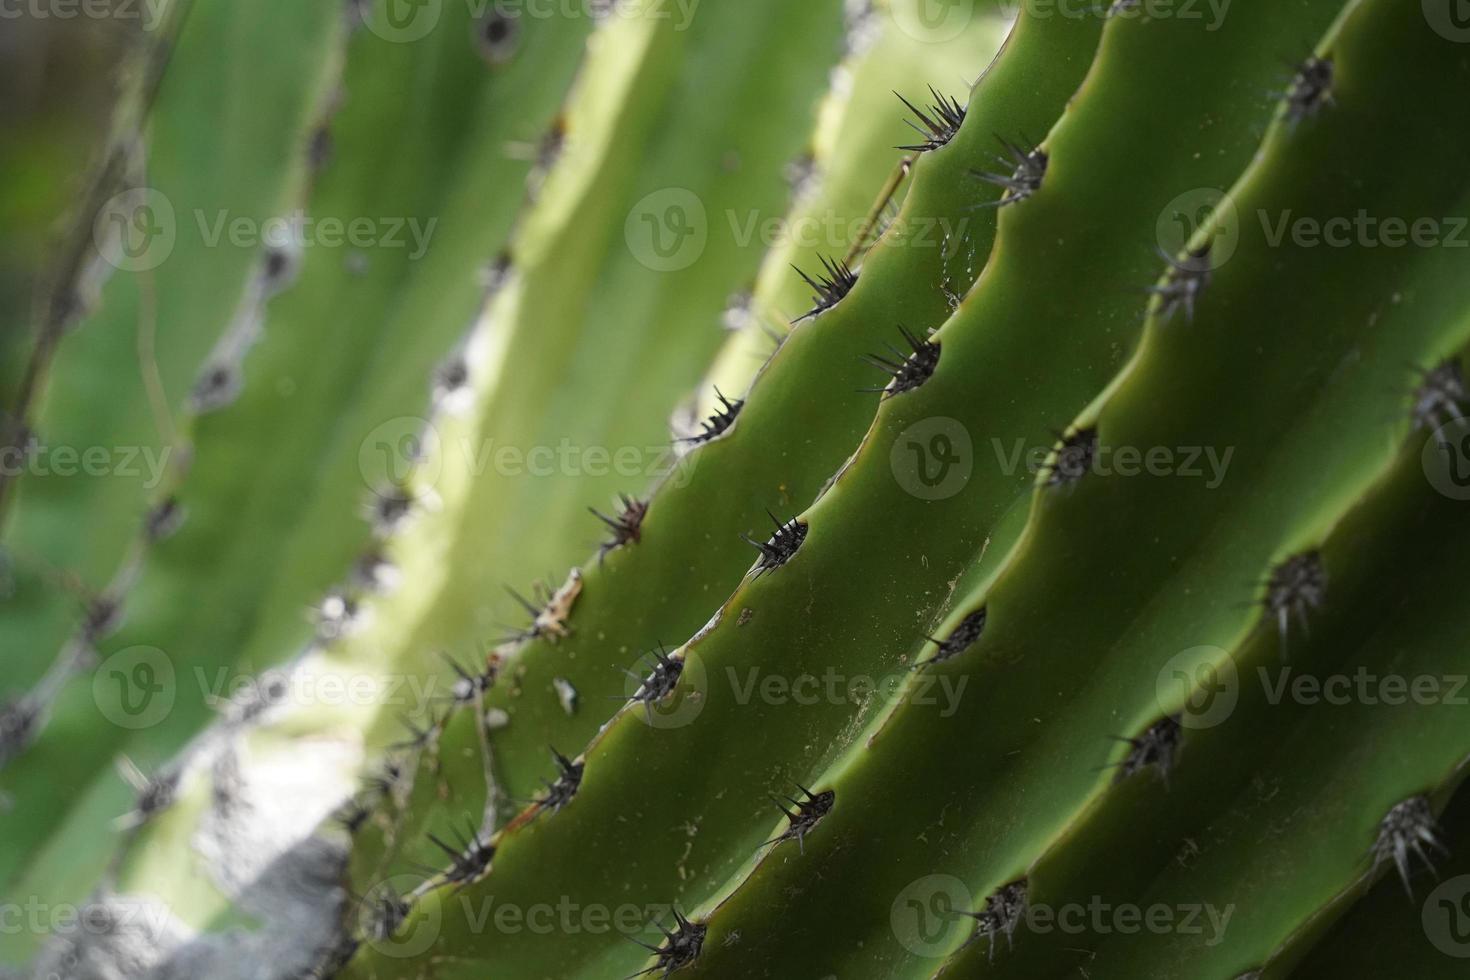 mexican cactus thorns detail in baja california photo